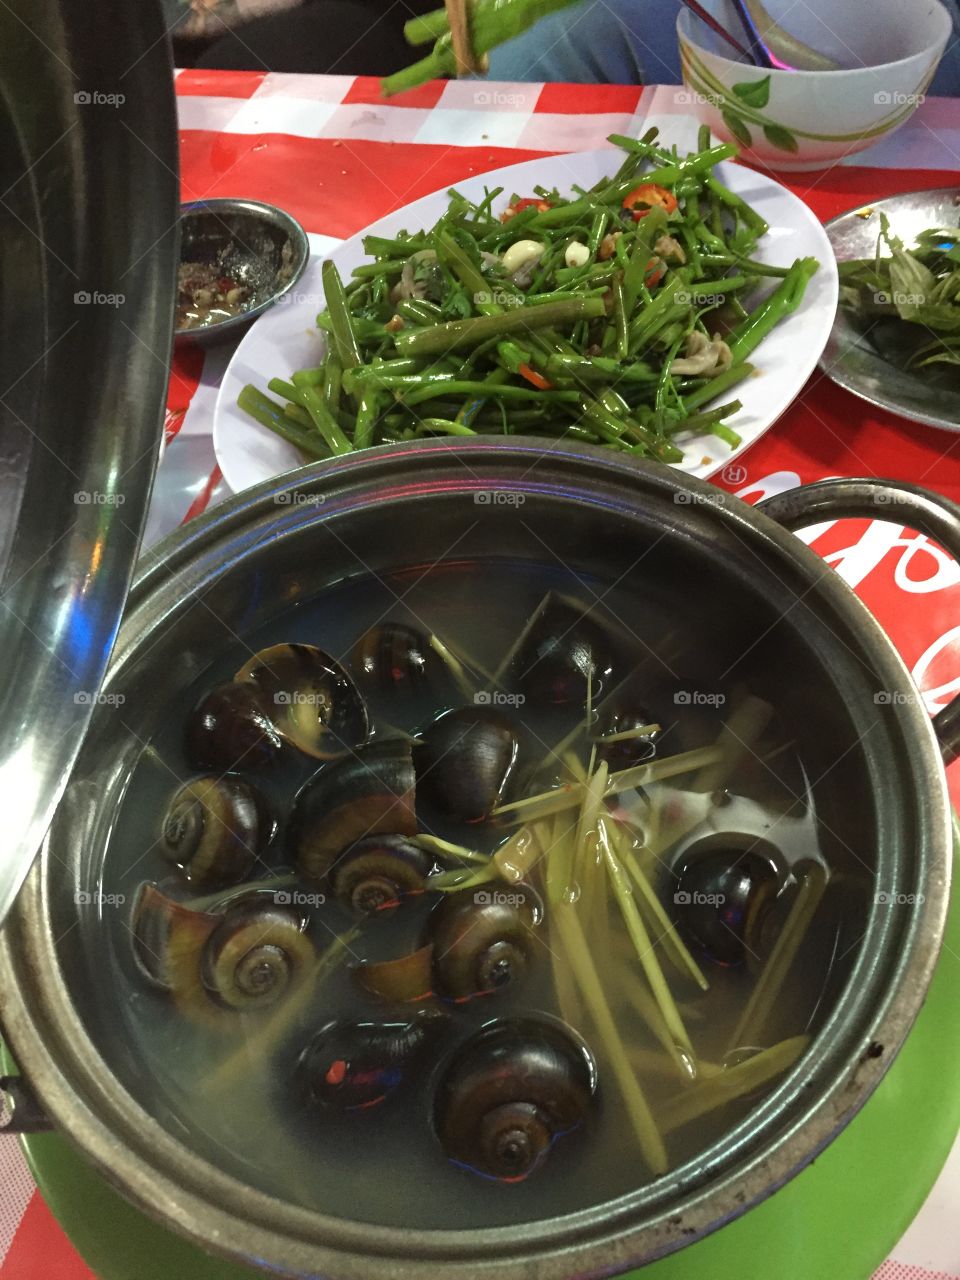 Tasty Snails in Vietnam